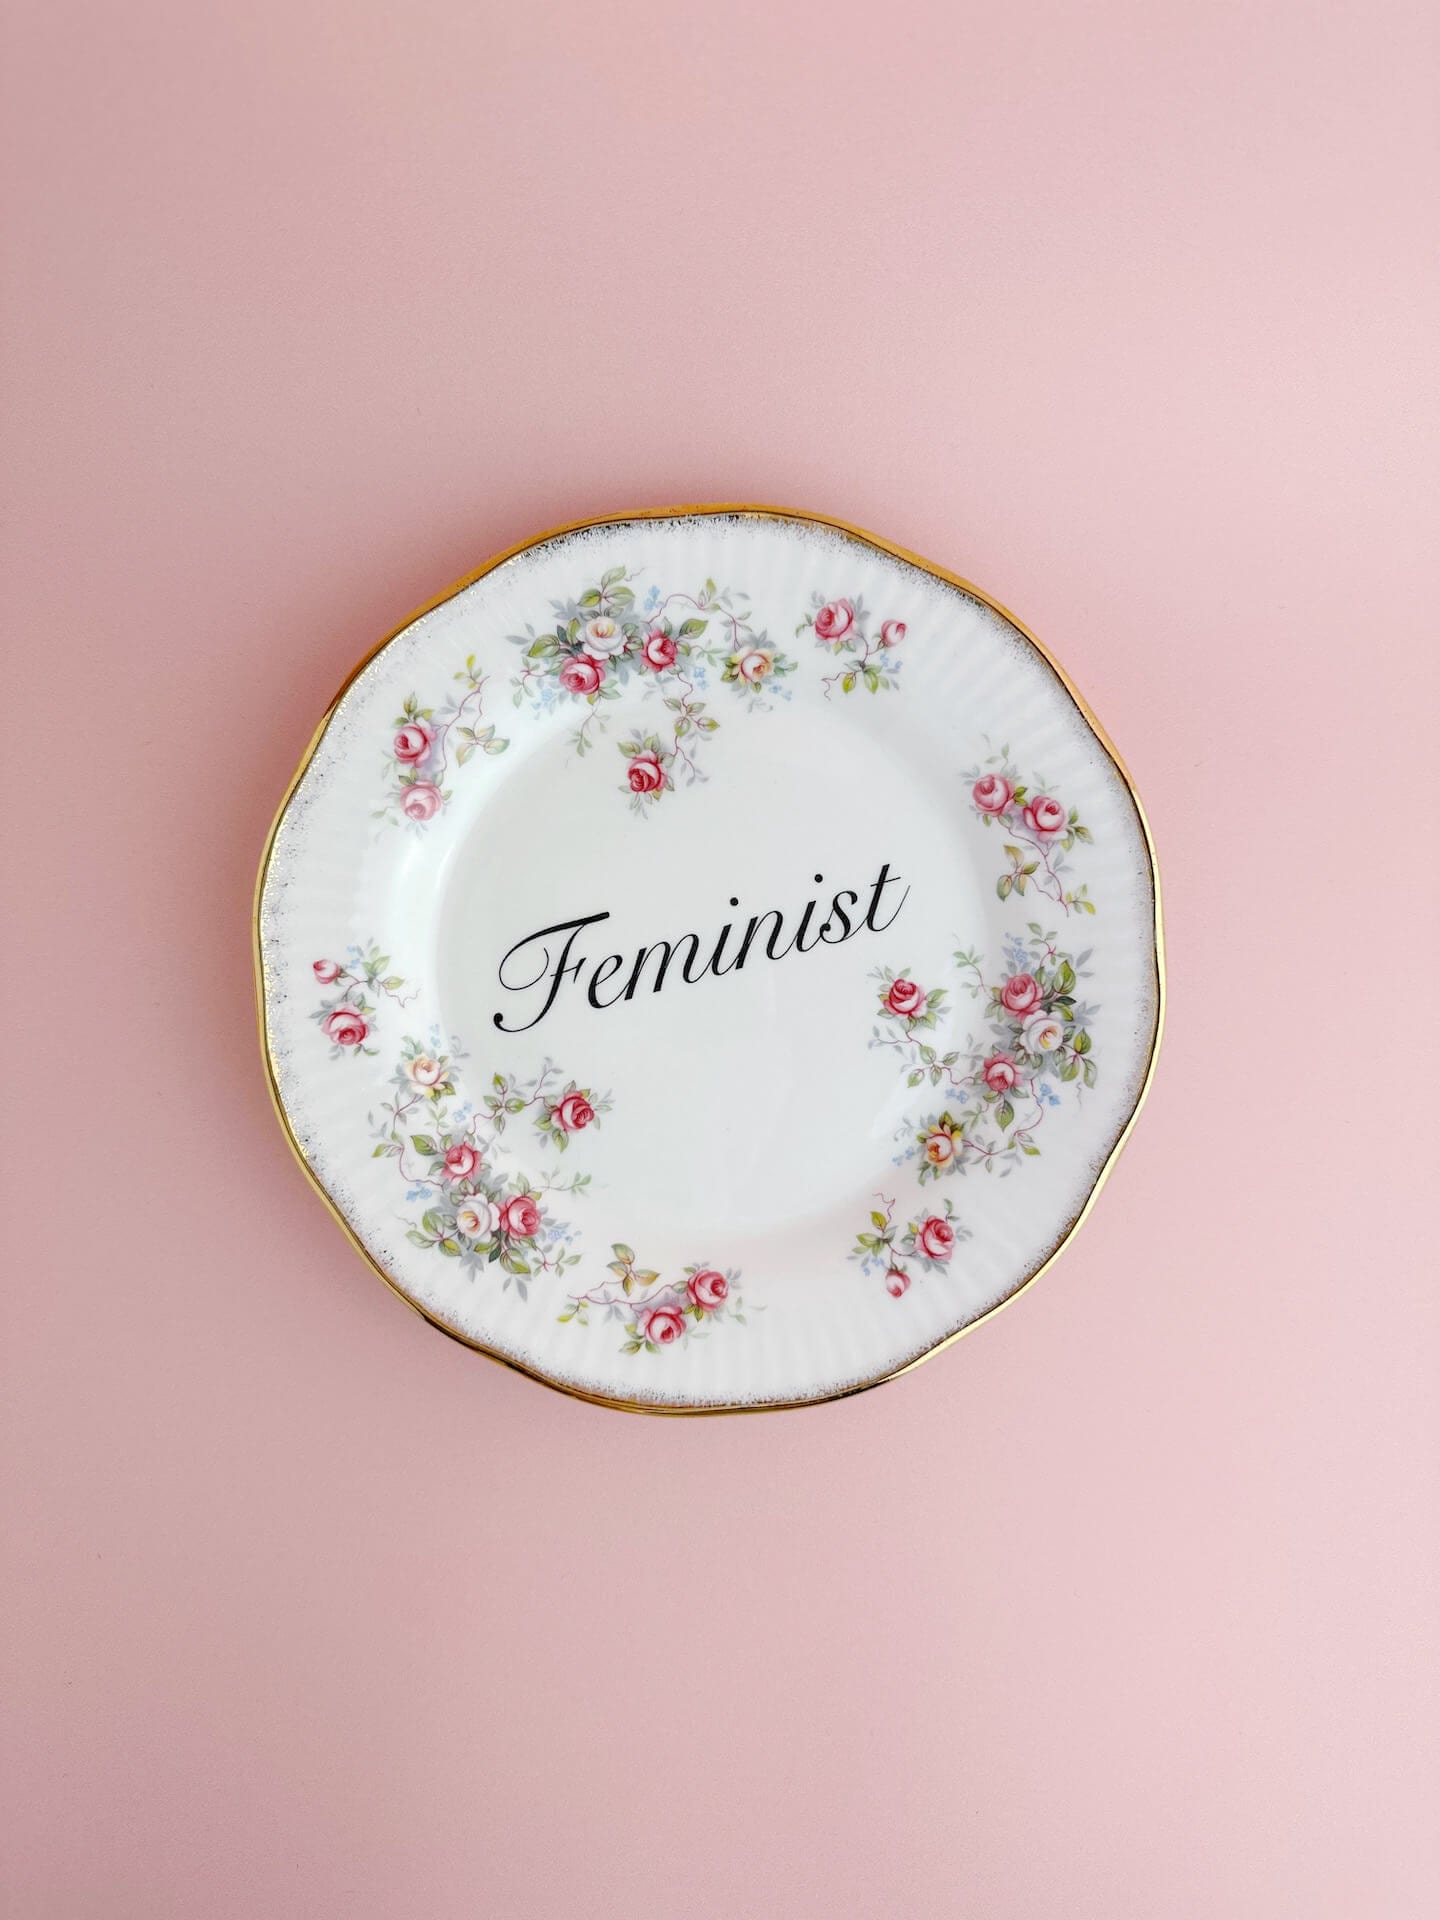 Beau & Badger Ceramics #66 Decorative Wall Plate - Feminist (multiple designs)